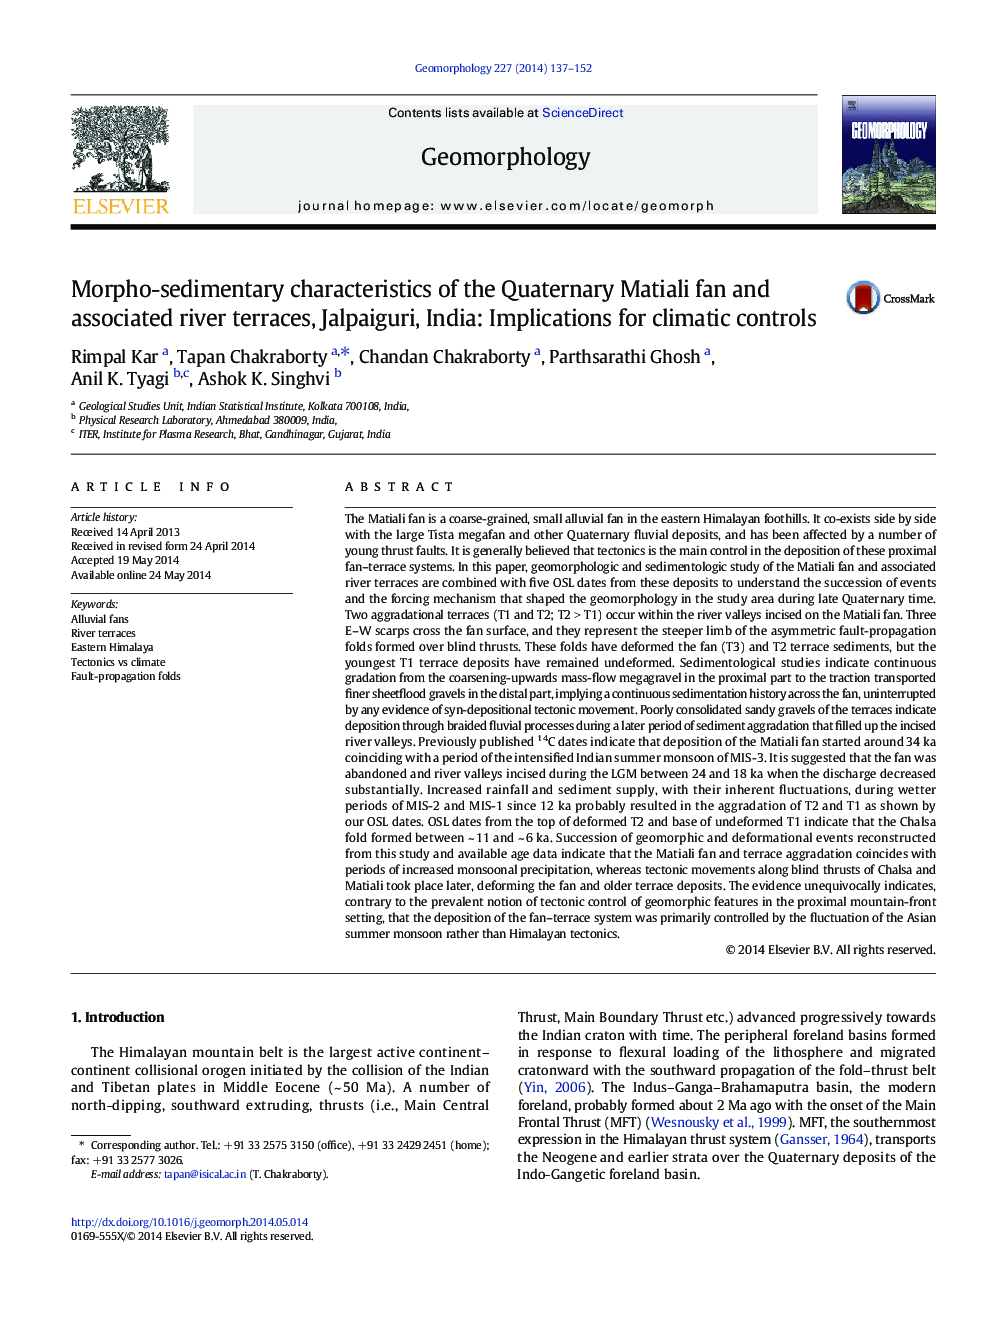 Morpho-sedimentary characteristics of the Quaternary Matiali fan and associated river terraces, Jalpaiguri, India: Implications for climatic controls